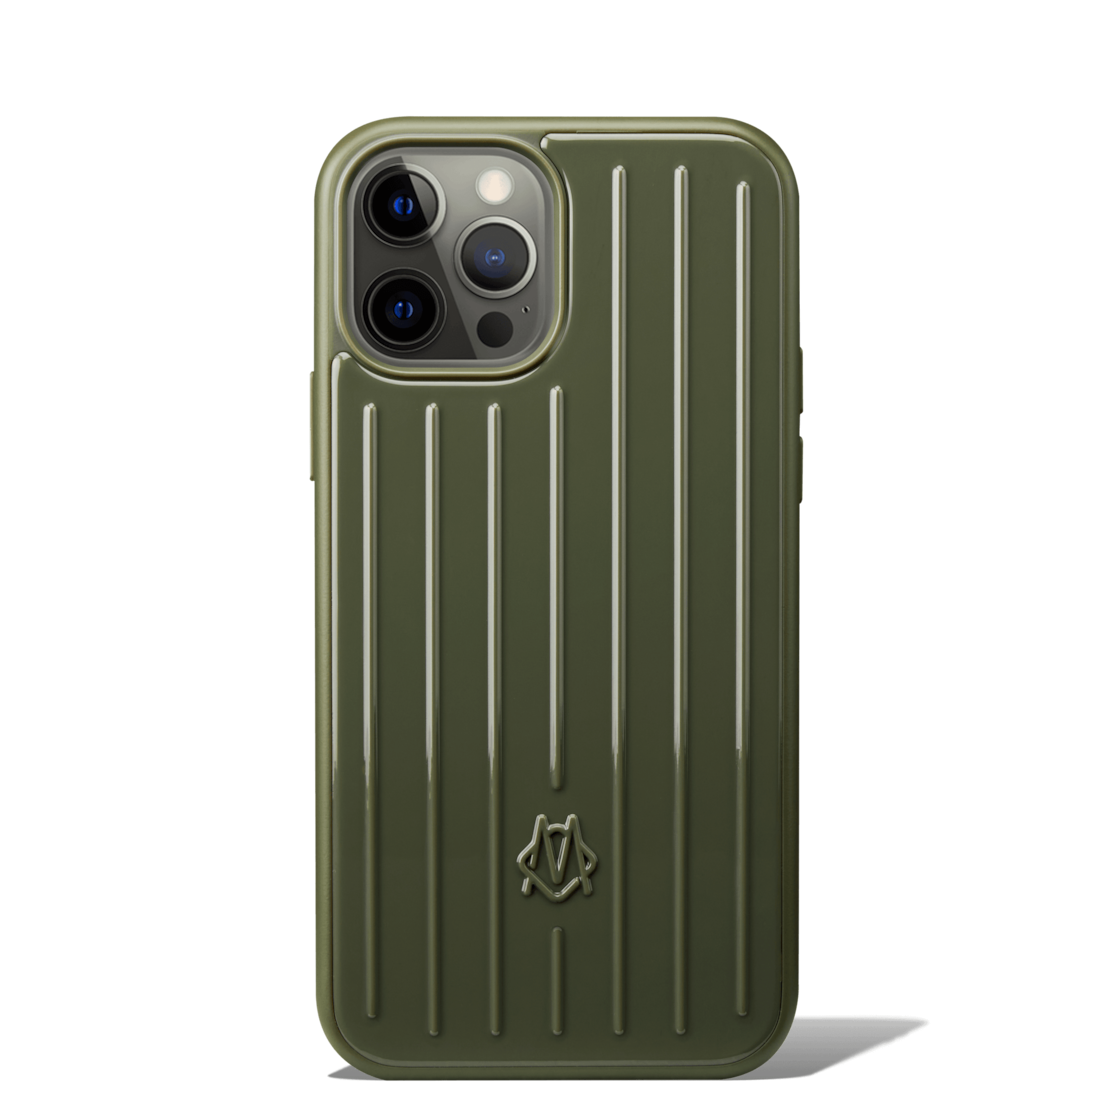 rimowa case iphone